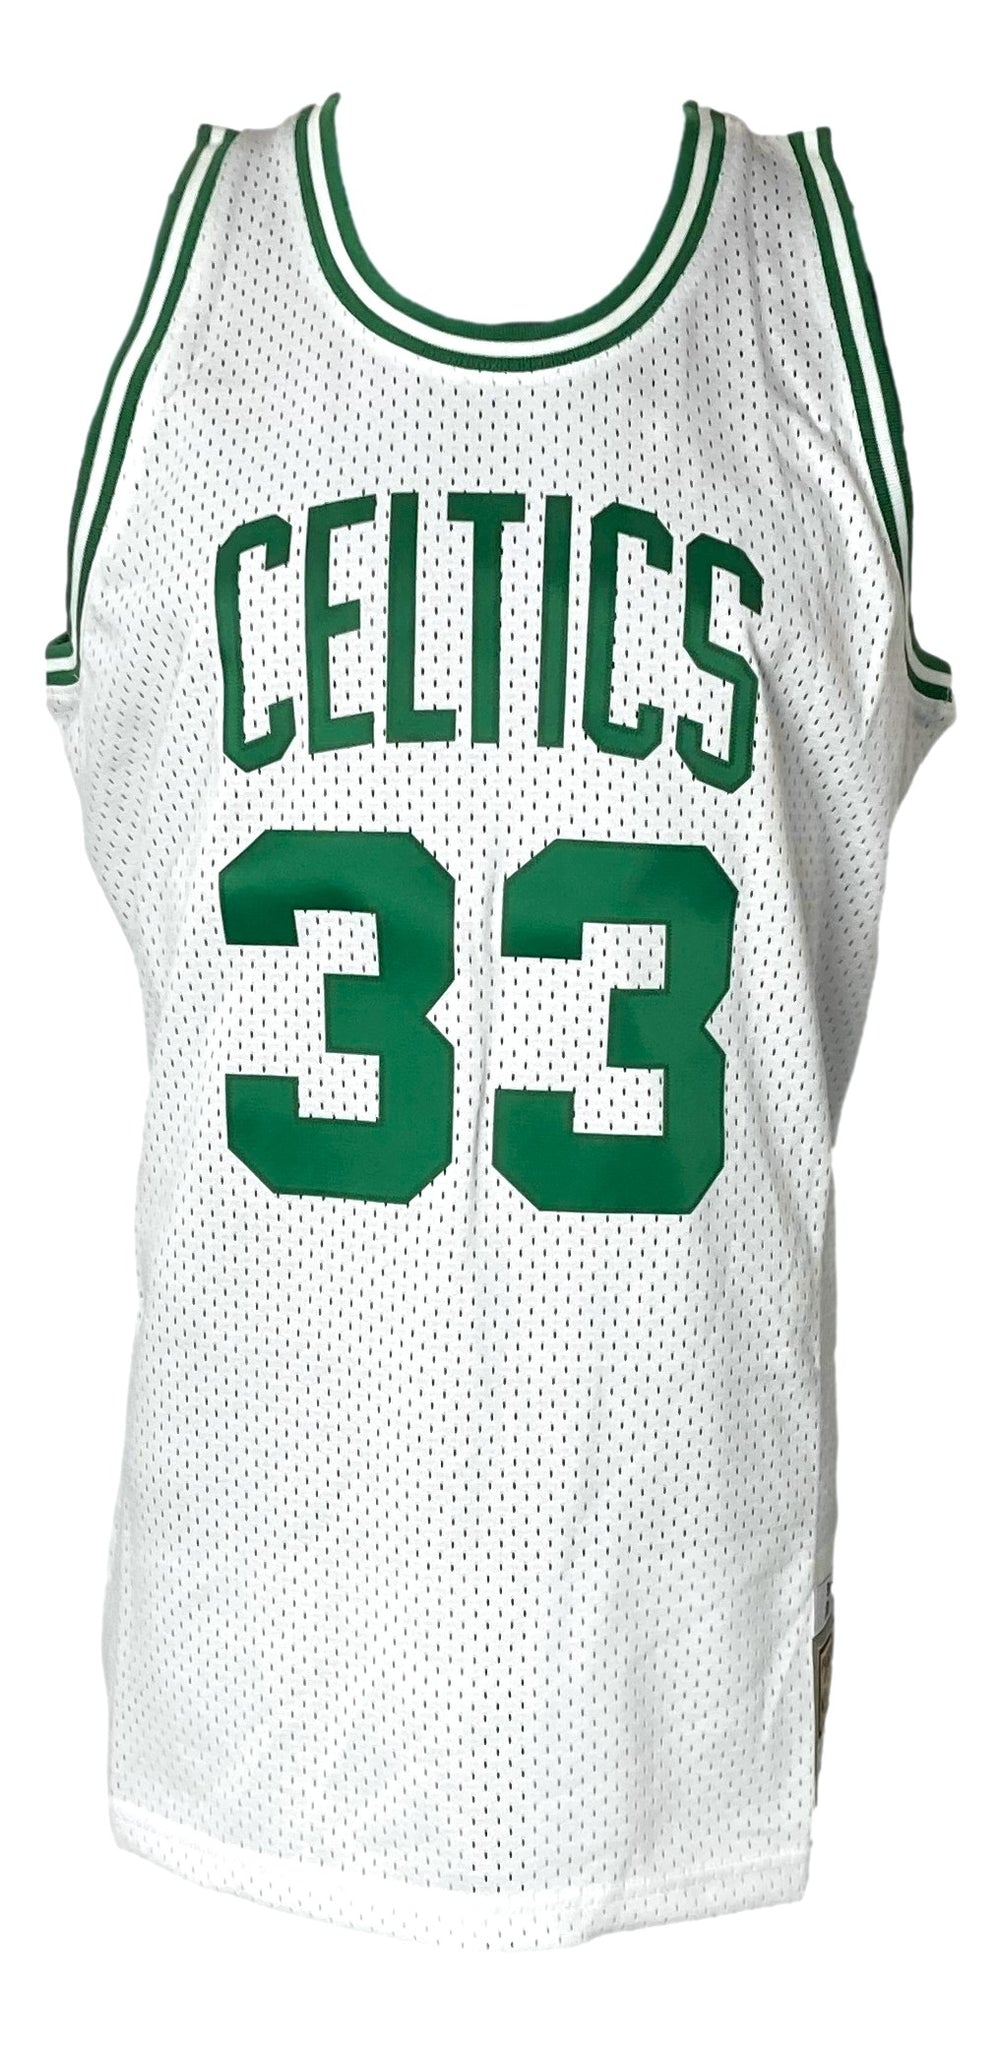 Larry Bird Signed Boston Celtics Green 1985-86 Style Mitchell